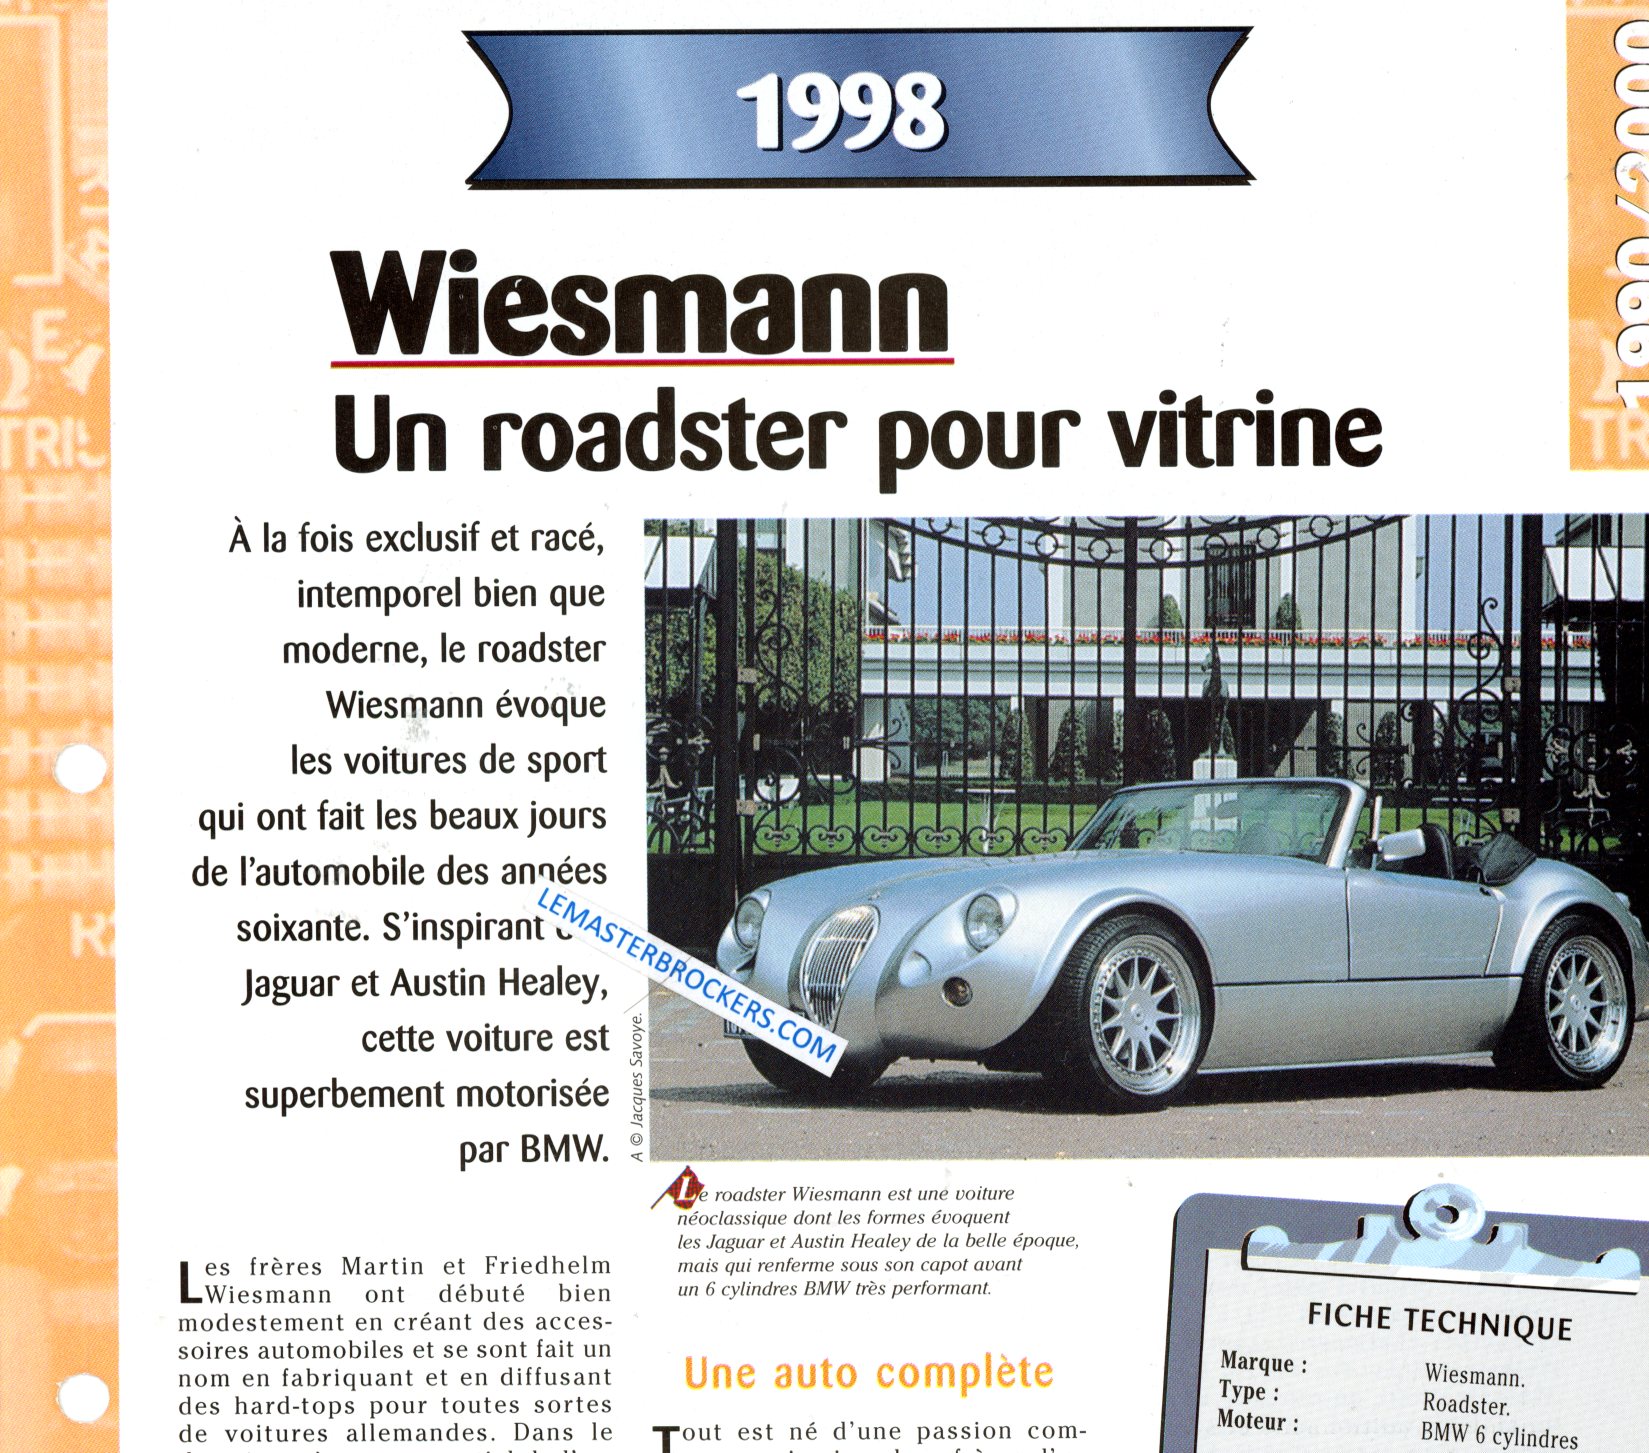 WIESMANN ROADSTER 1998 MOTEUR BMW FICHE TECHNIQUE